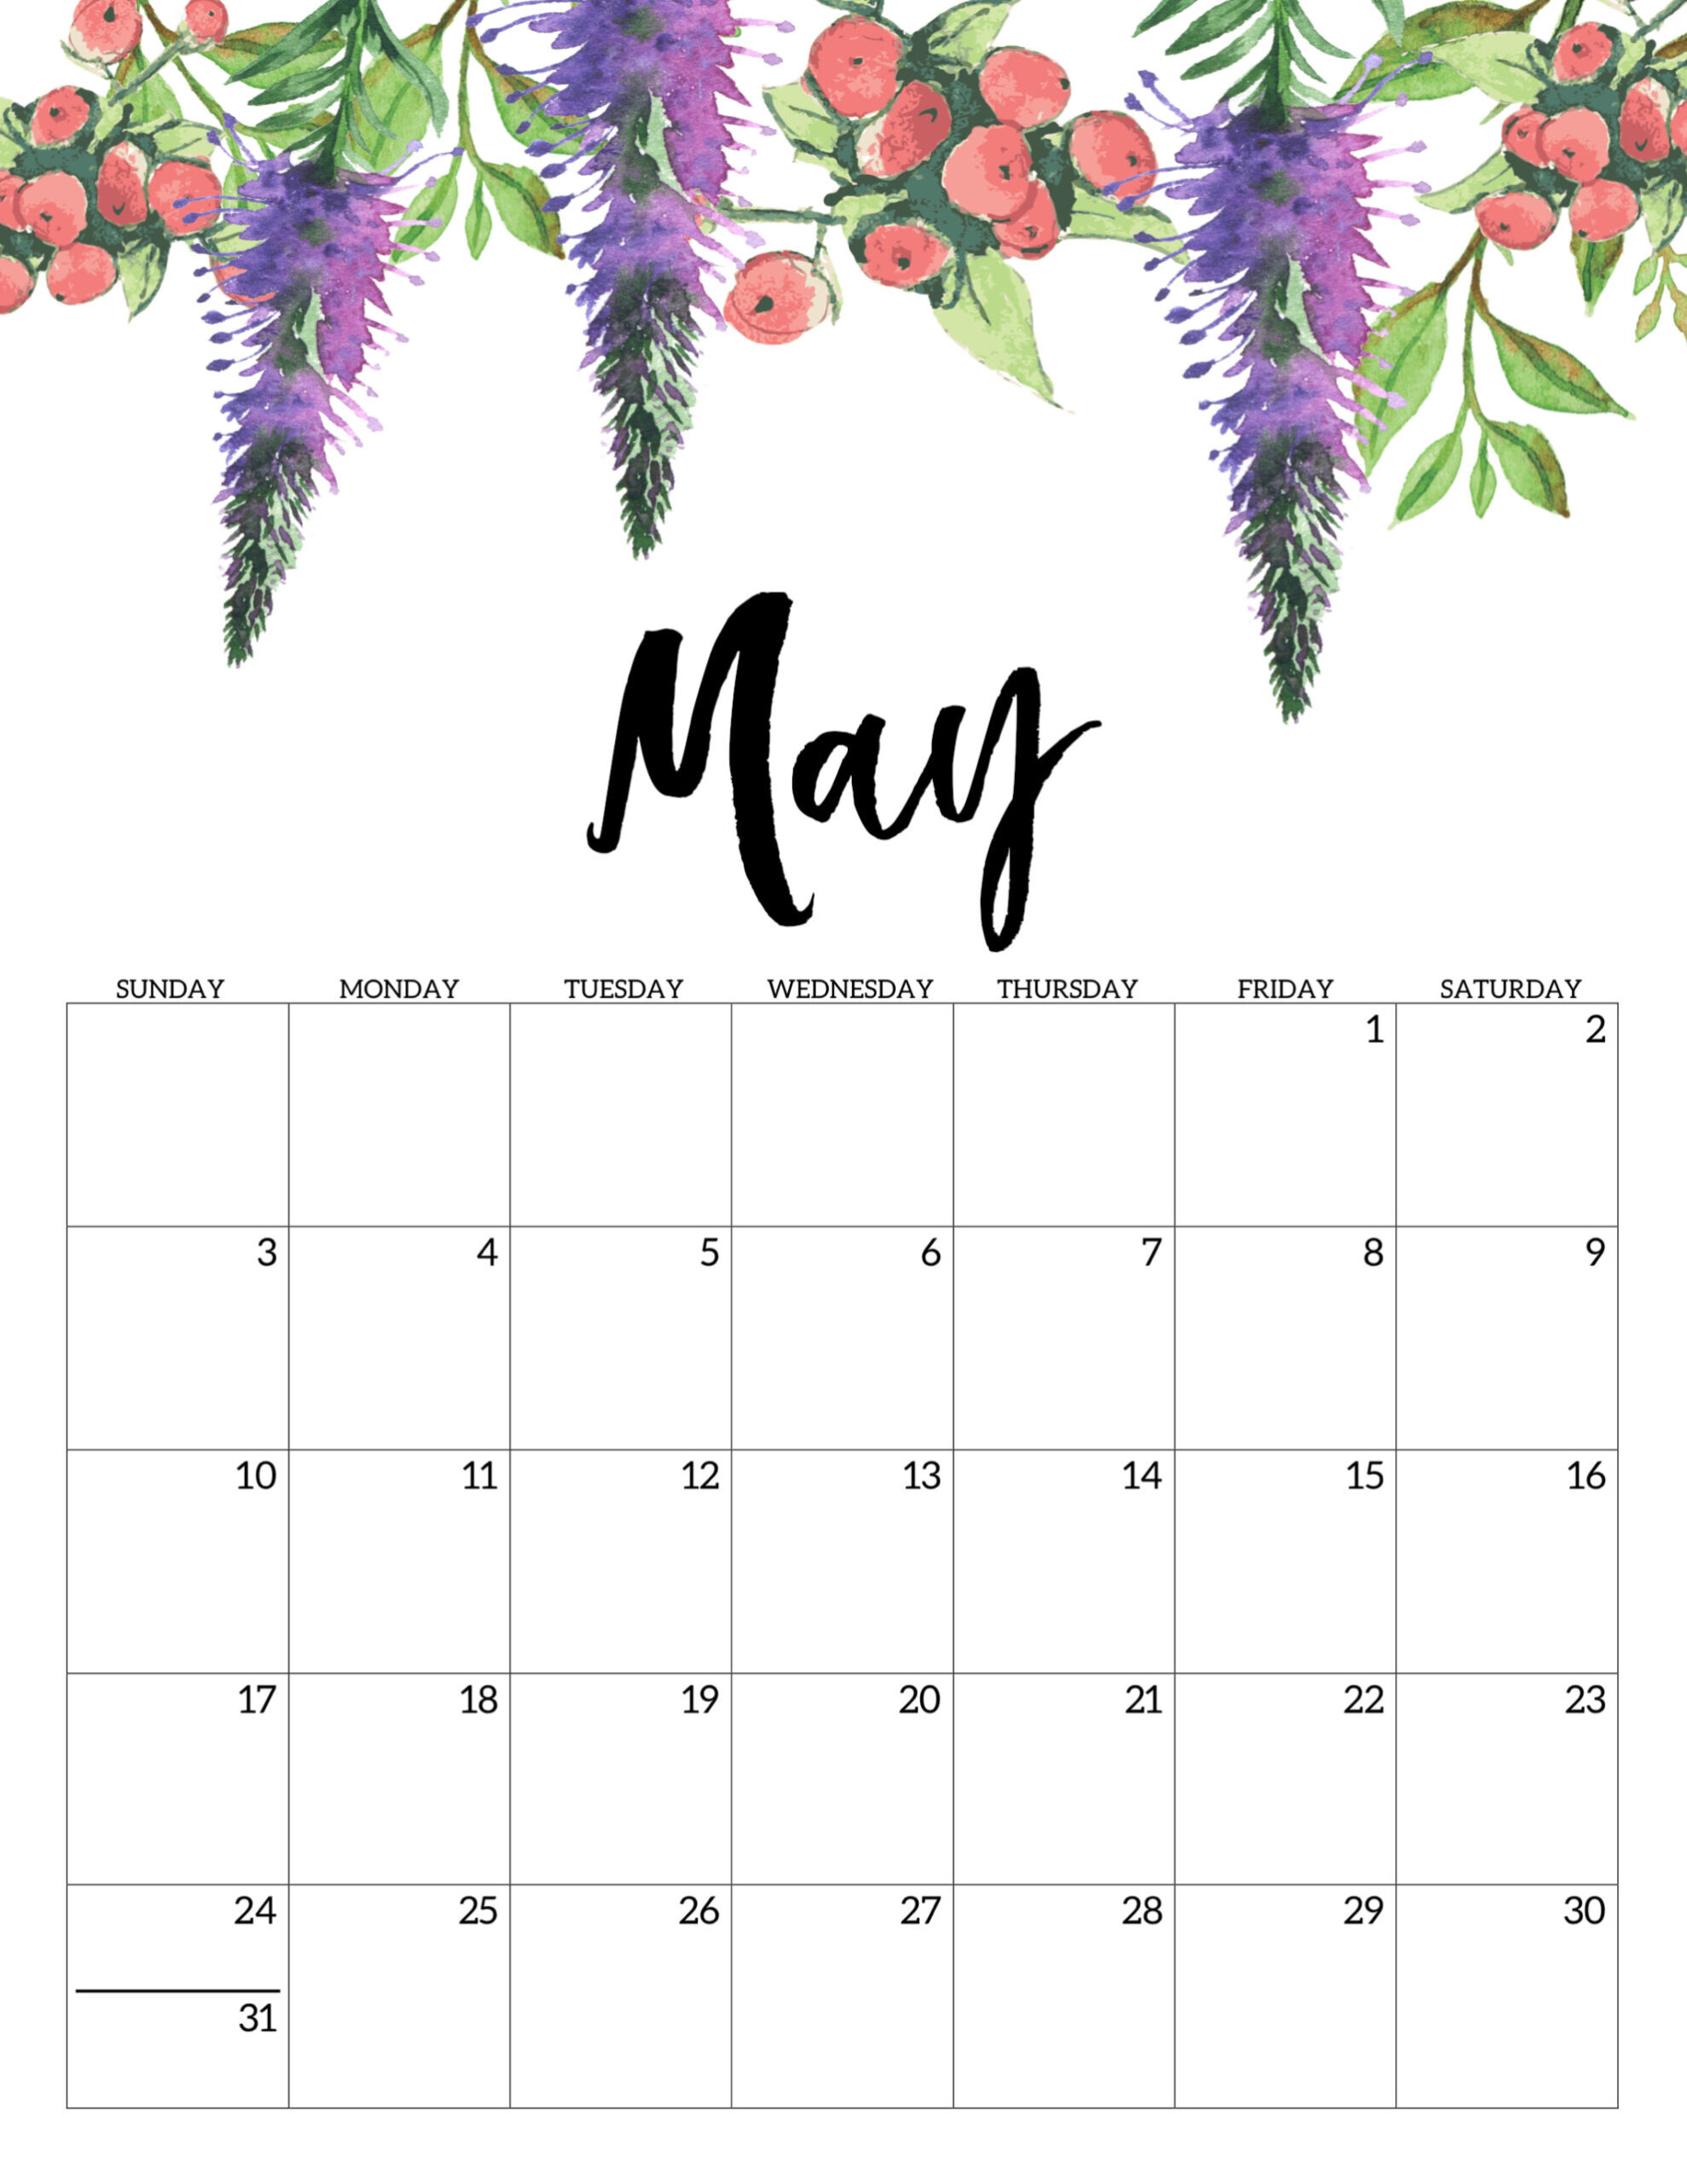 Free Printable Calendar 2020 - Floral | Paper Trail Design